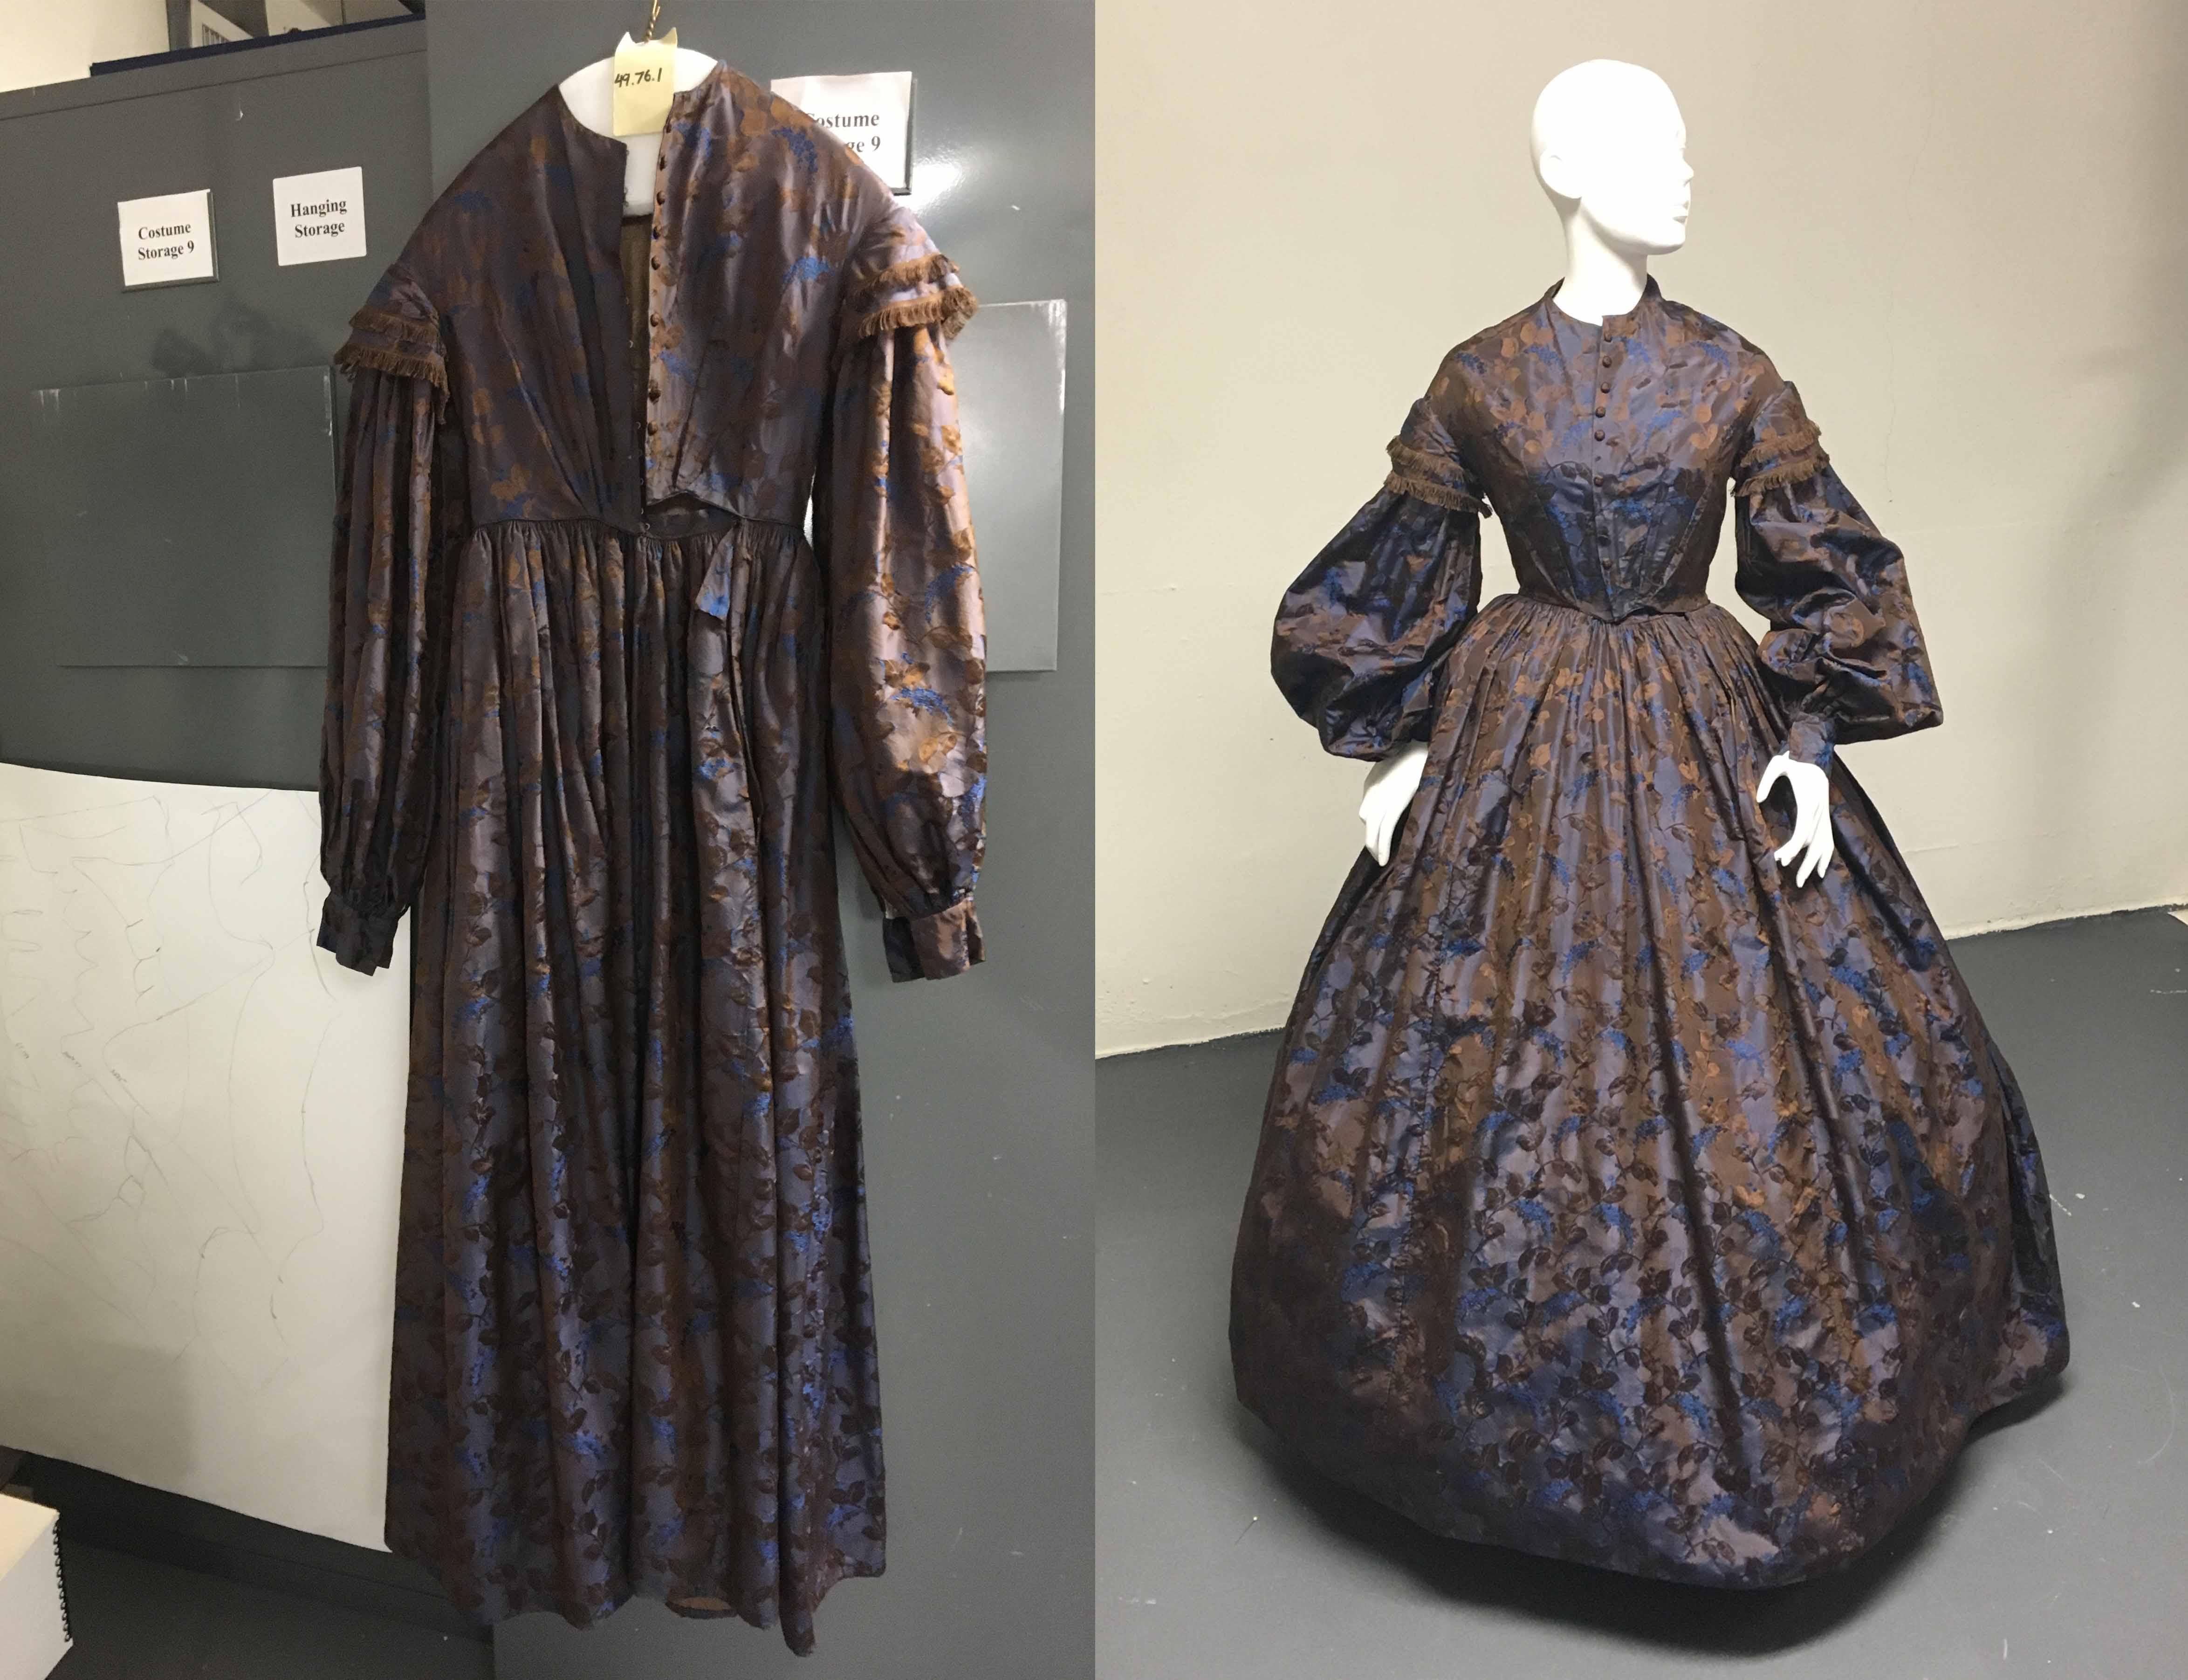 19th century dresses